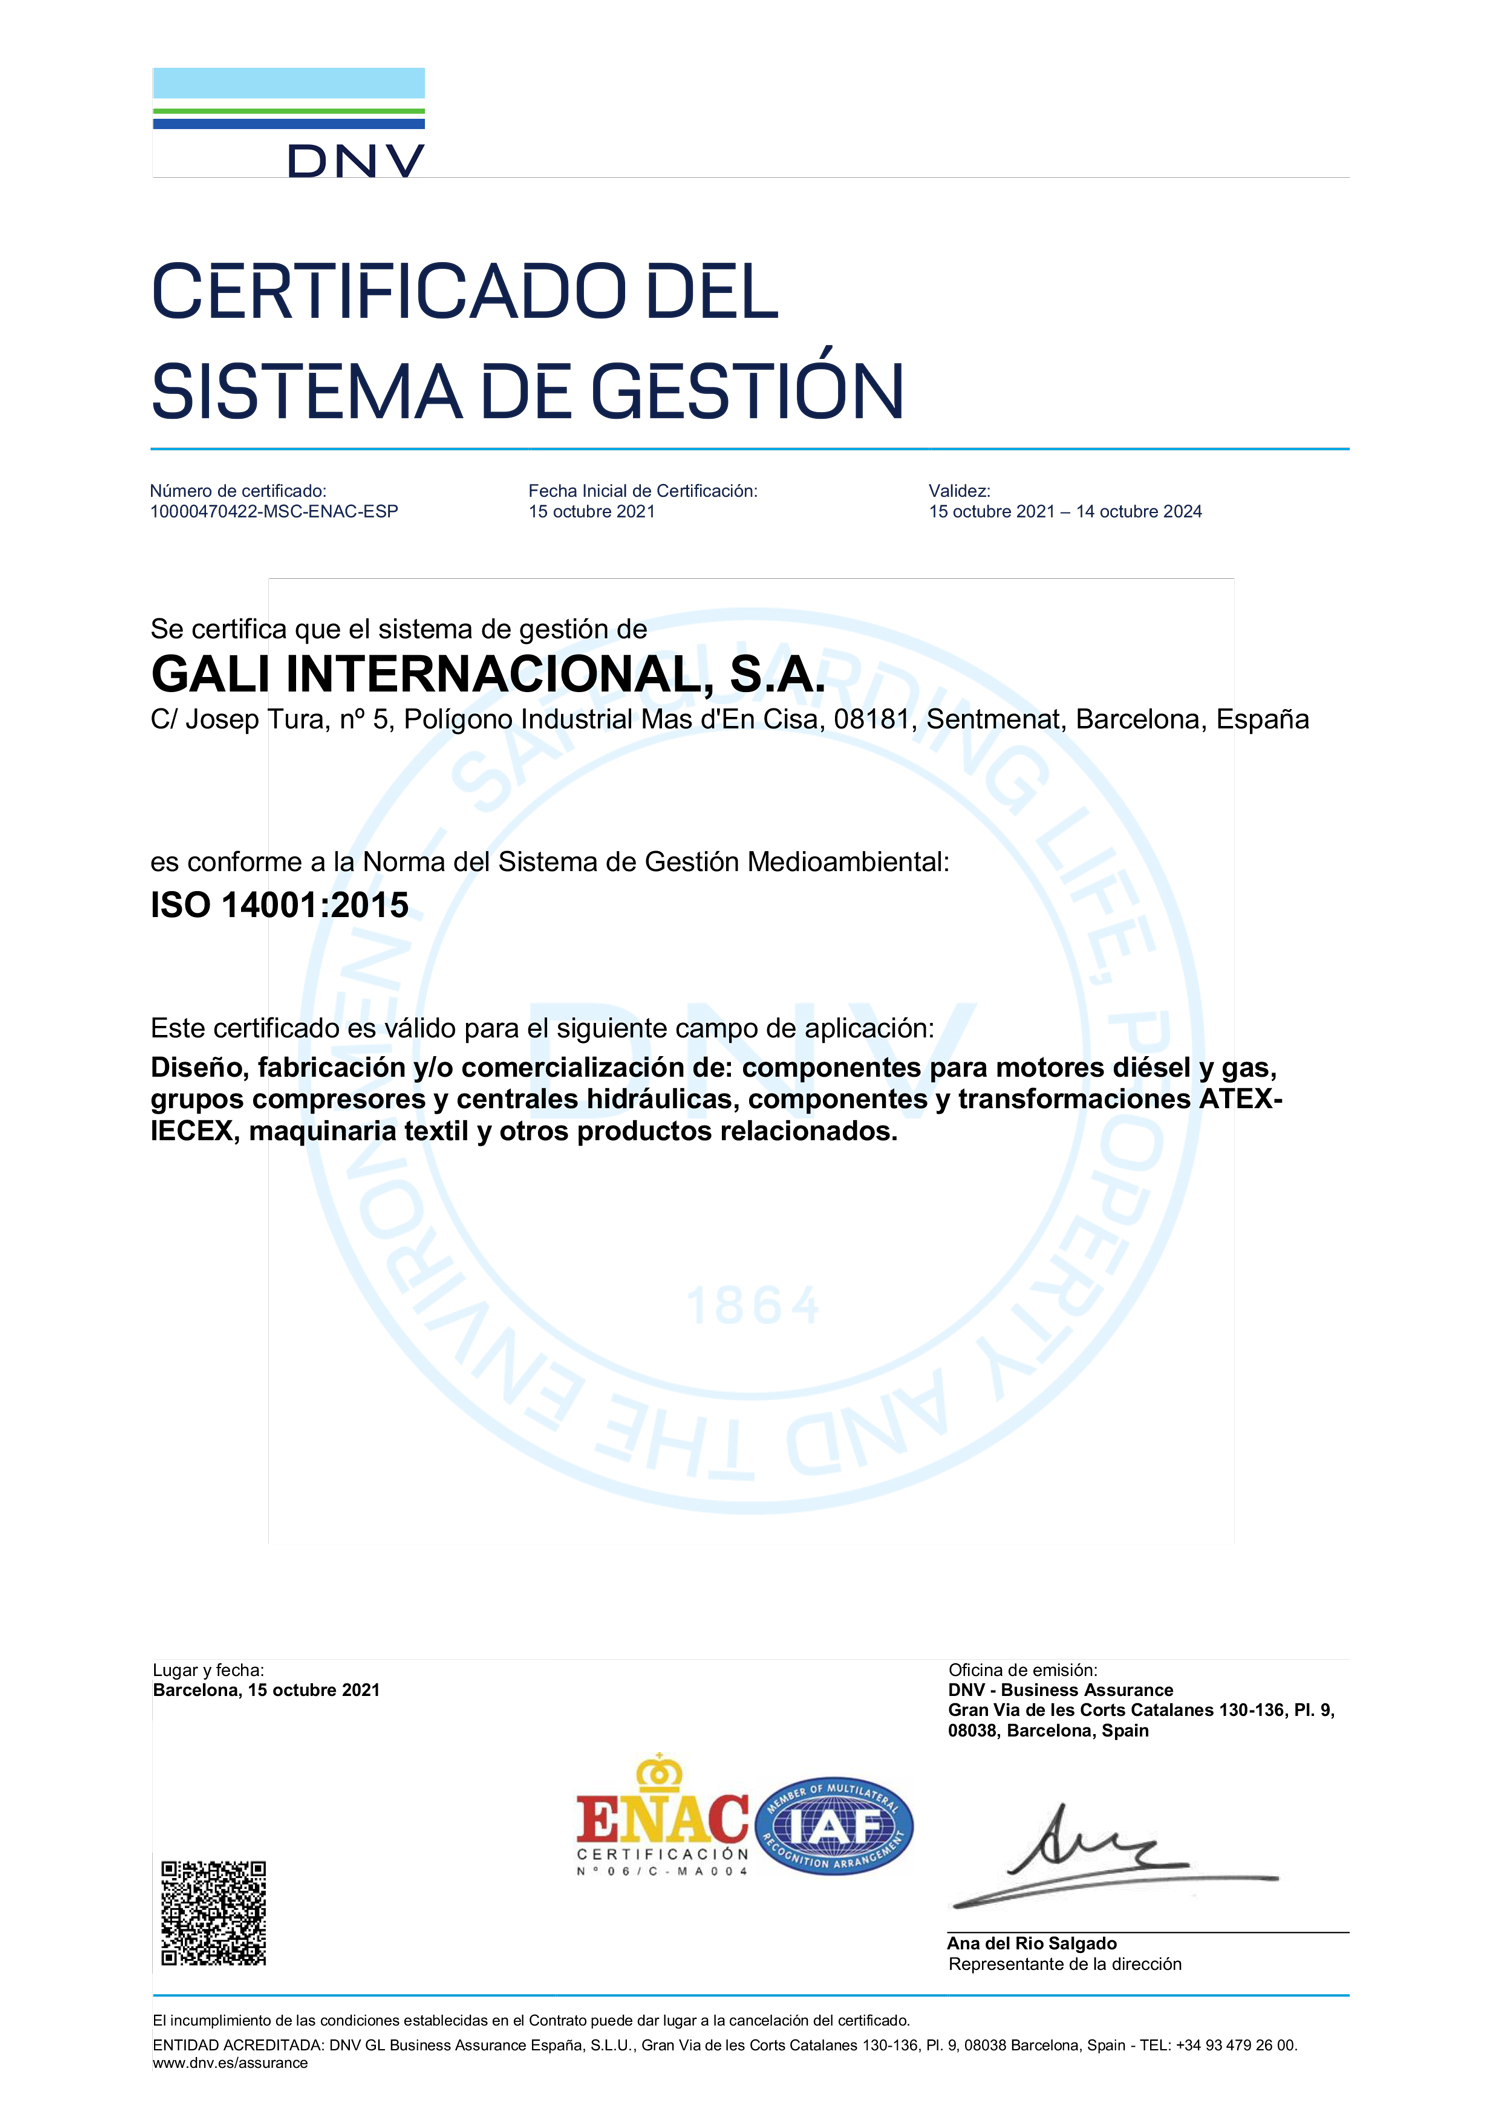 Certificate ISO-14001-2015 gali internacional ES